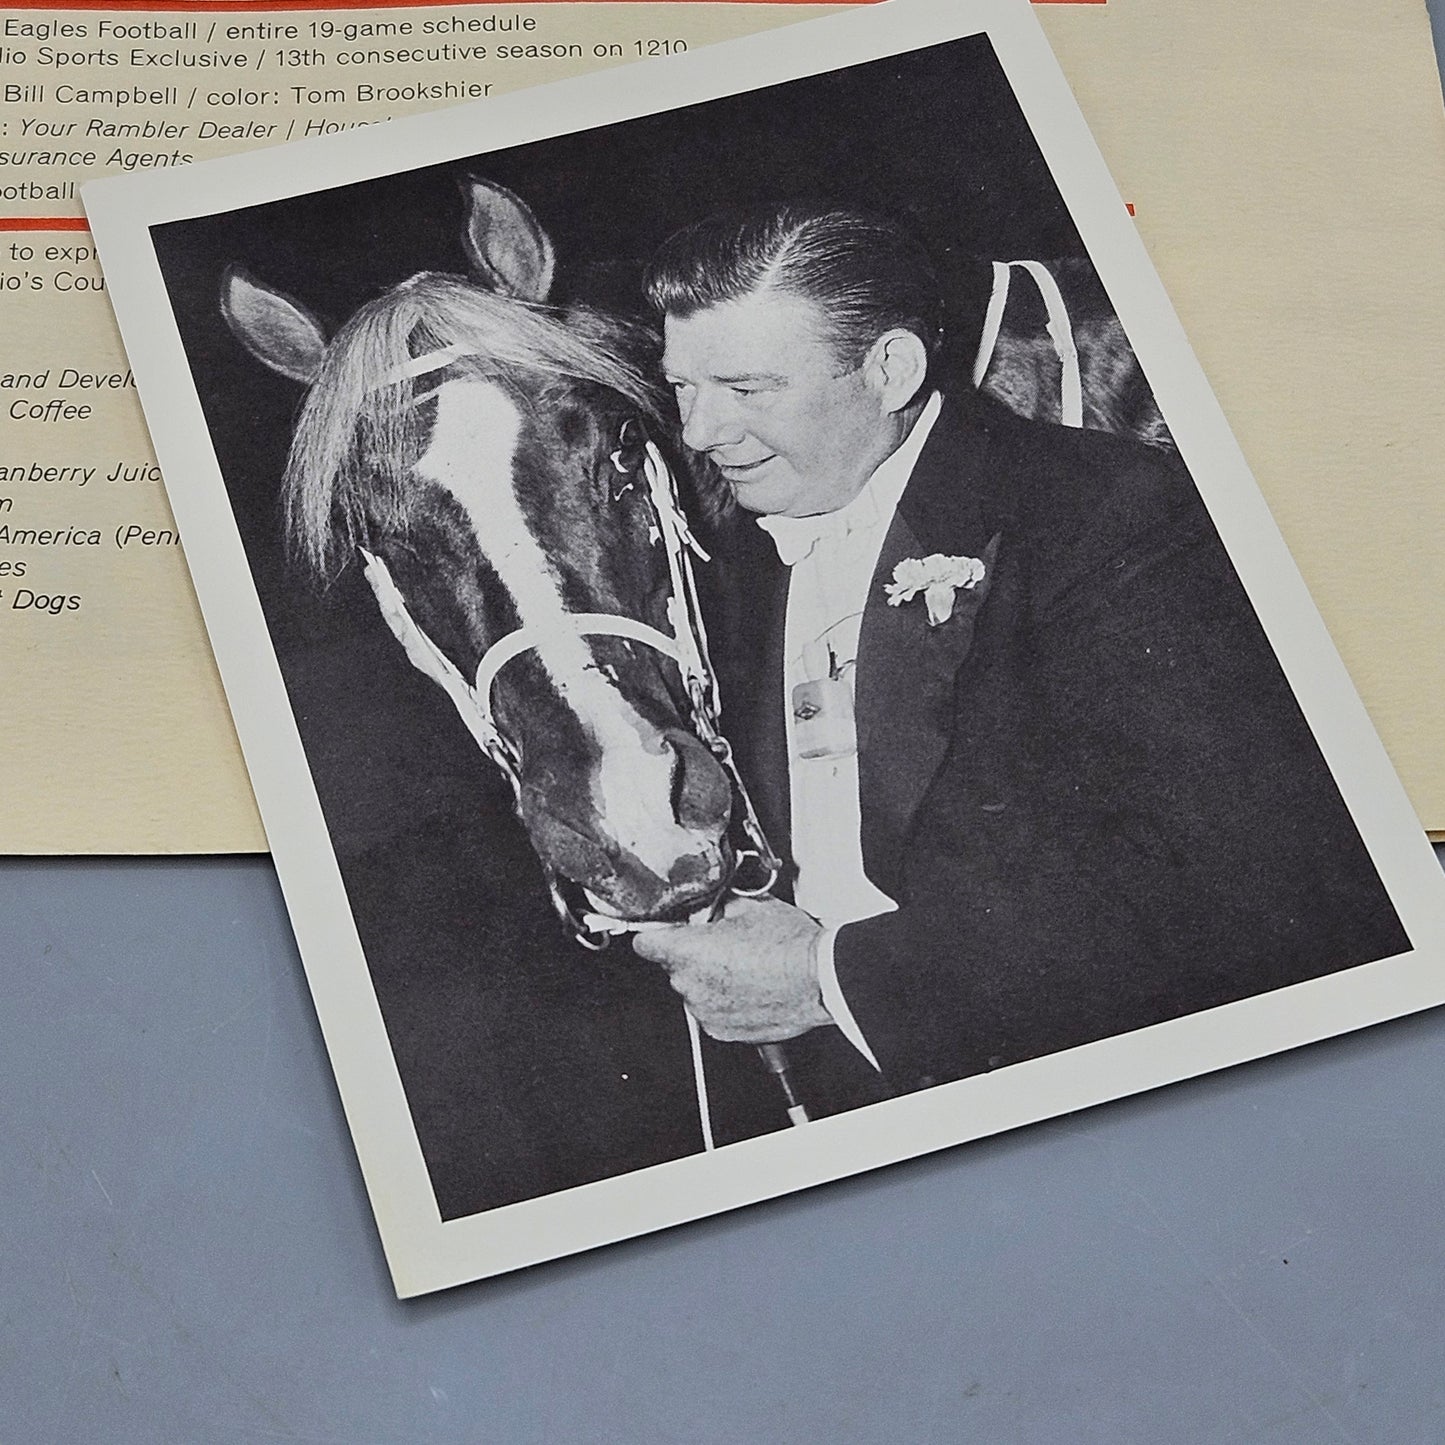 1963 Devon Horse Show Program with WCAU Radio Promotional Photos - Country Show at Devon